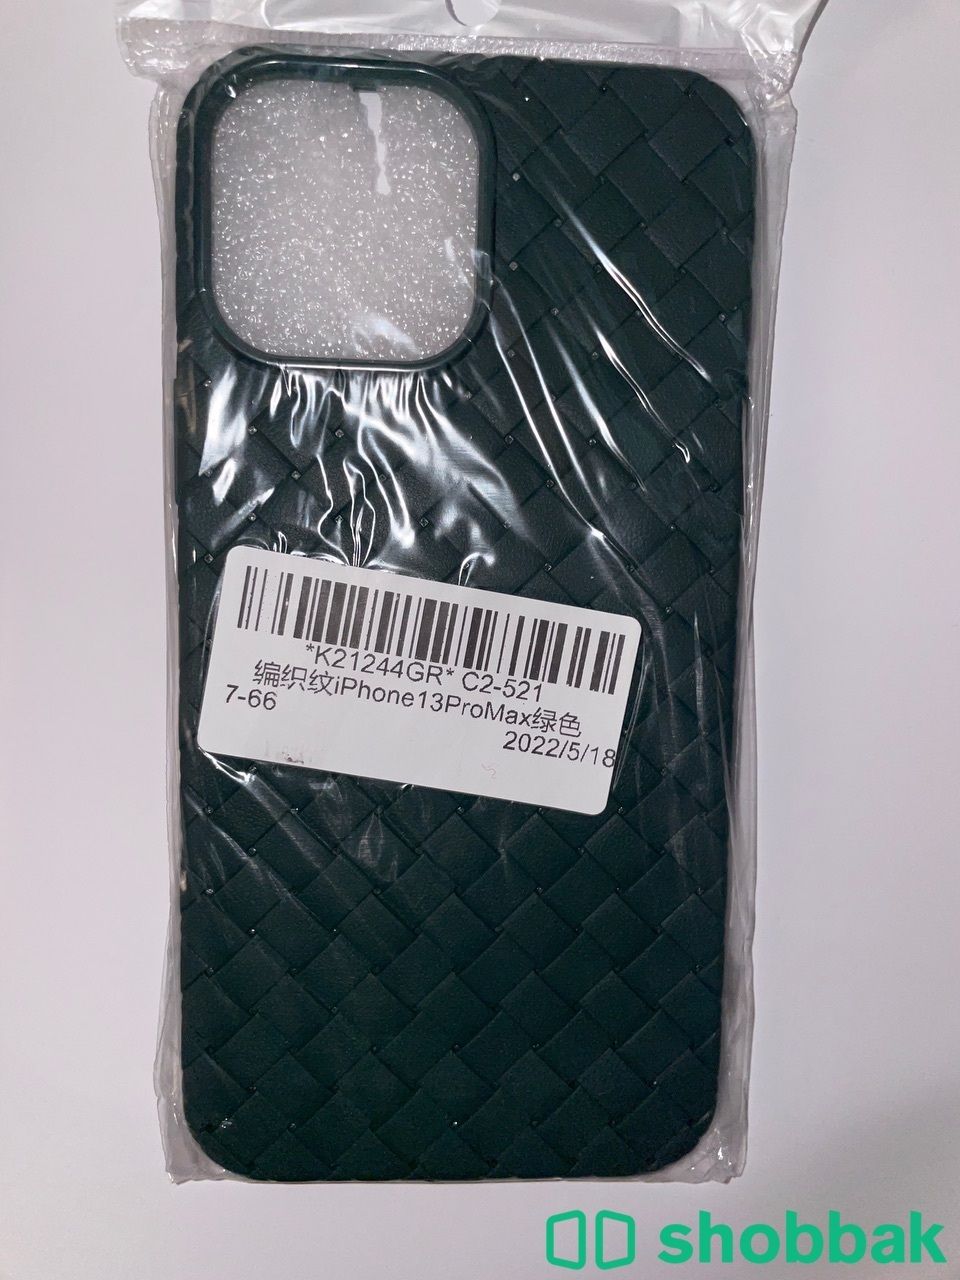 كفر ايفون 13 برو ماكس جلد خفيف  iPhone 13 pro max cover  Shobbak Saudi Arabia